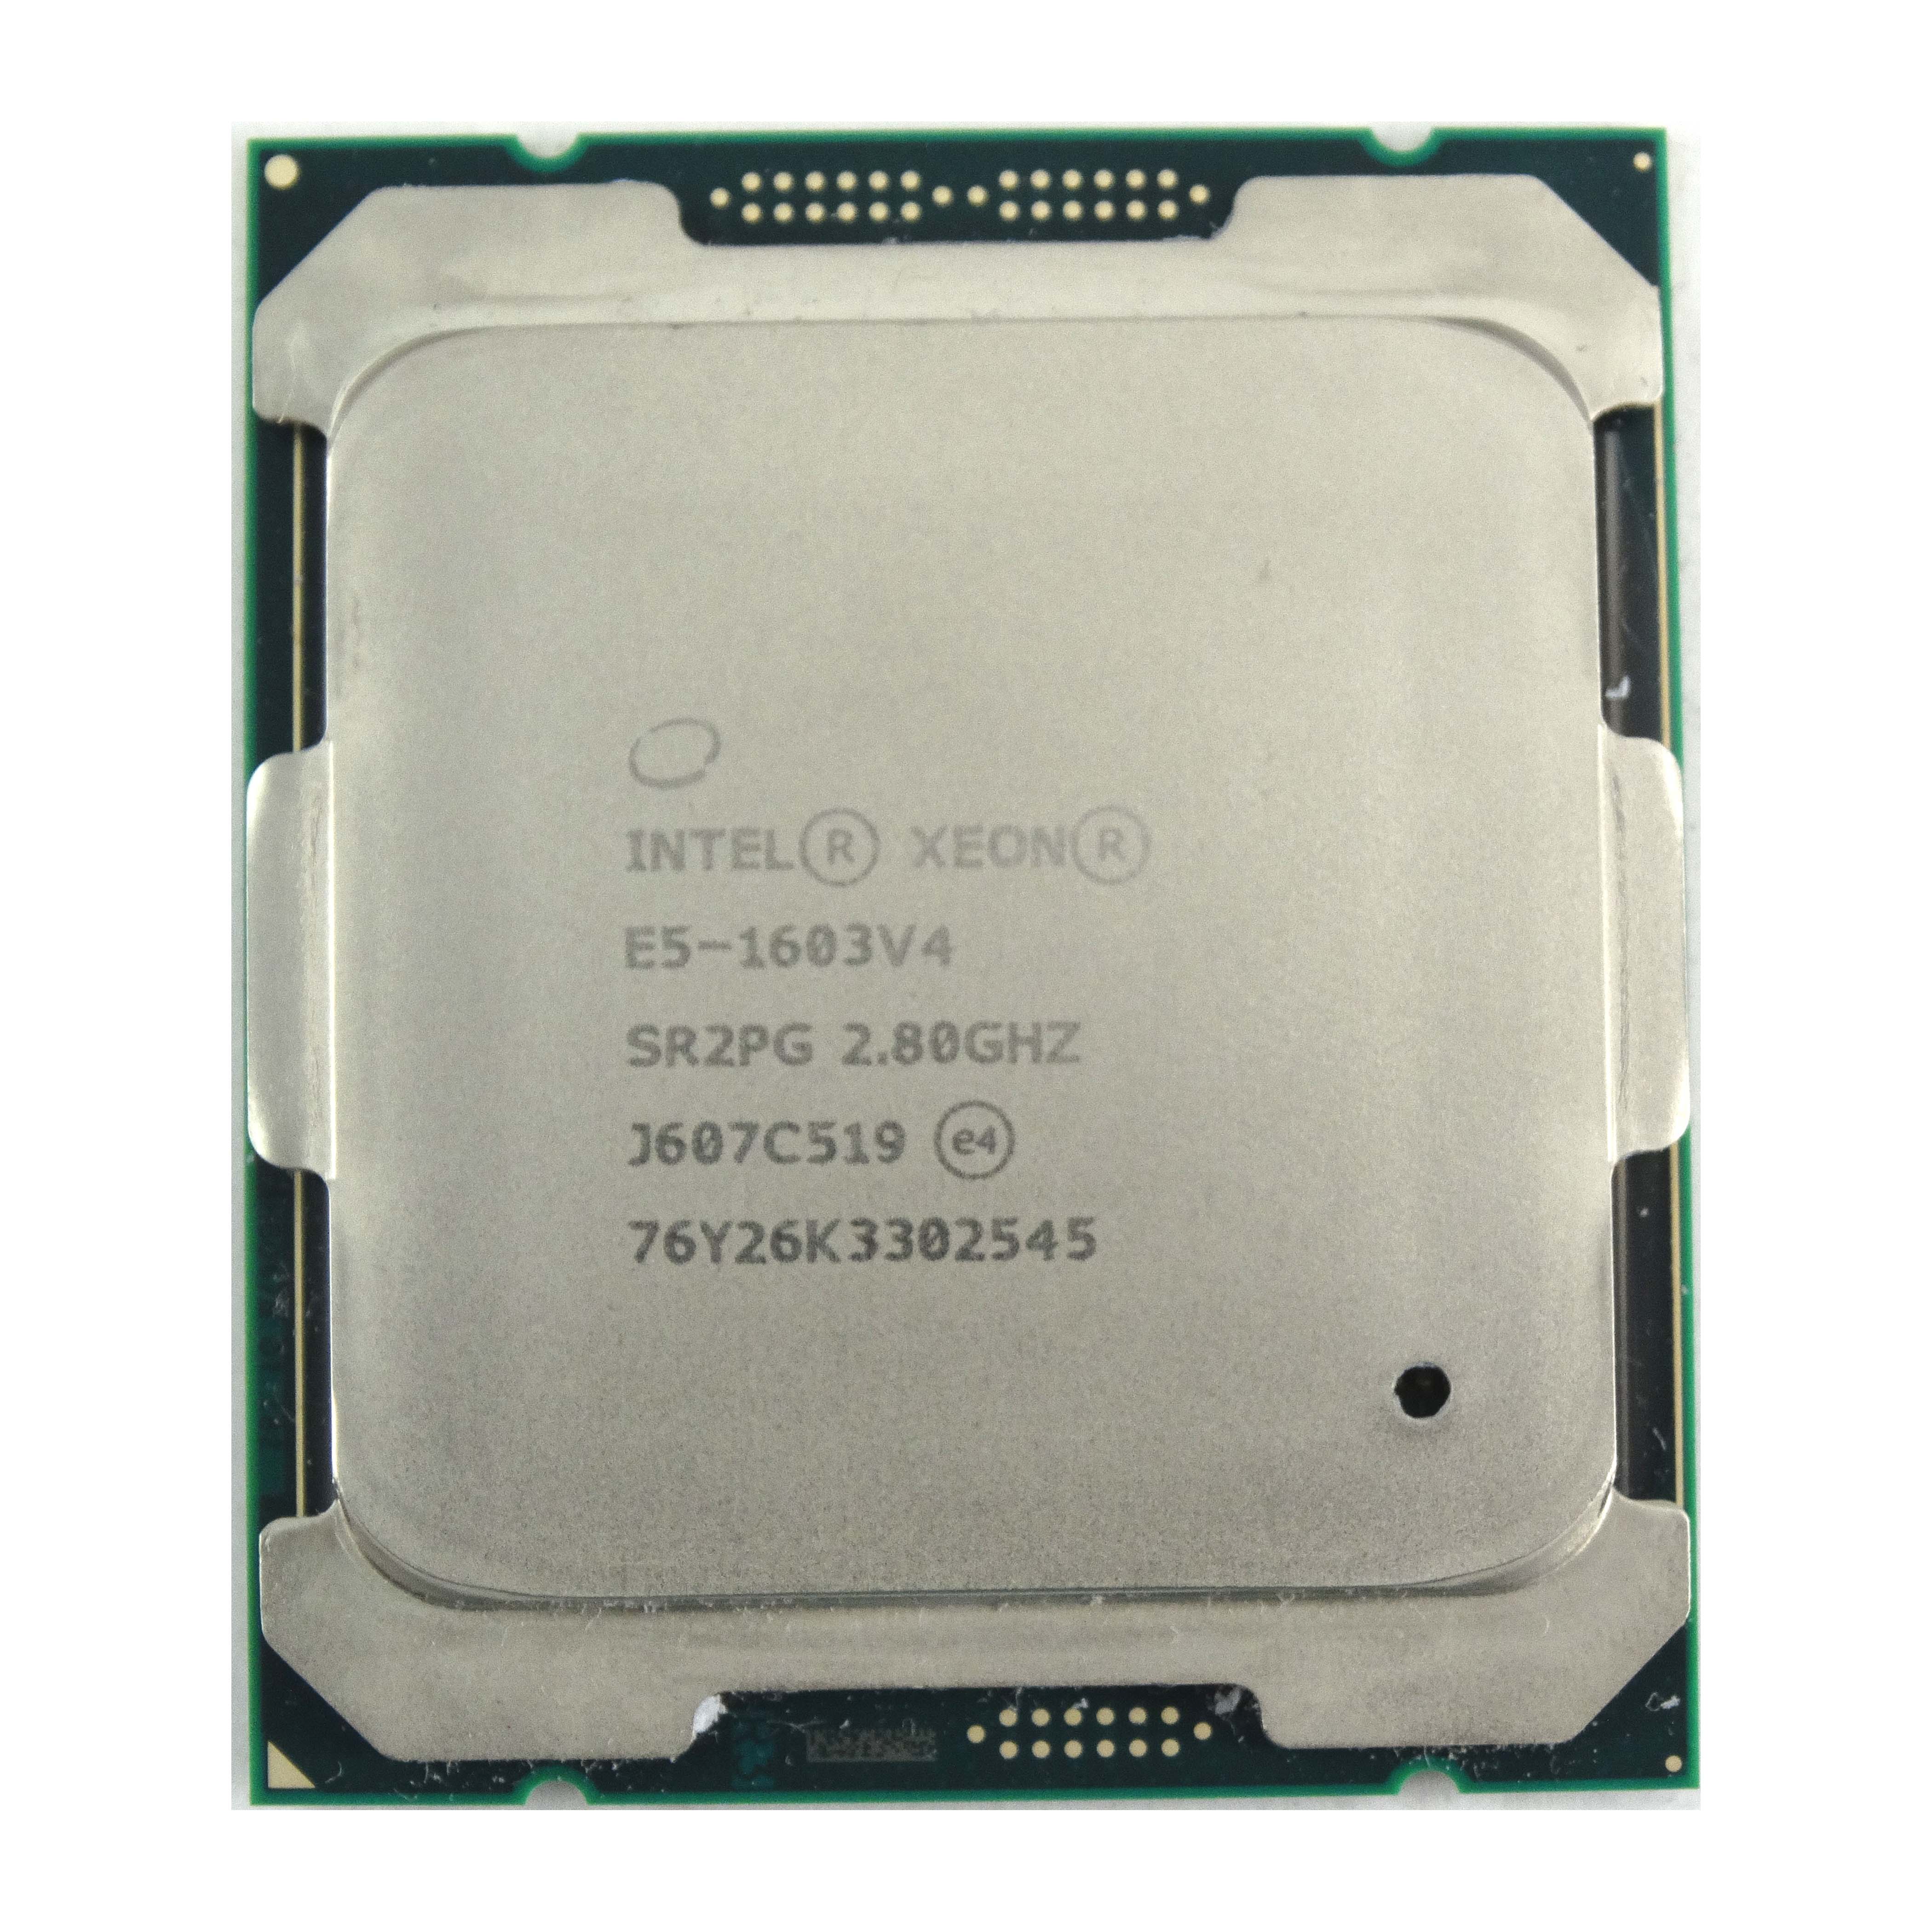 Intel Xeon E5-1603V4 2.80GHz 4Core 10MB LGA2011 Processor (Intel Xeon E5-1603 V4)